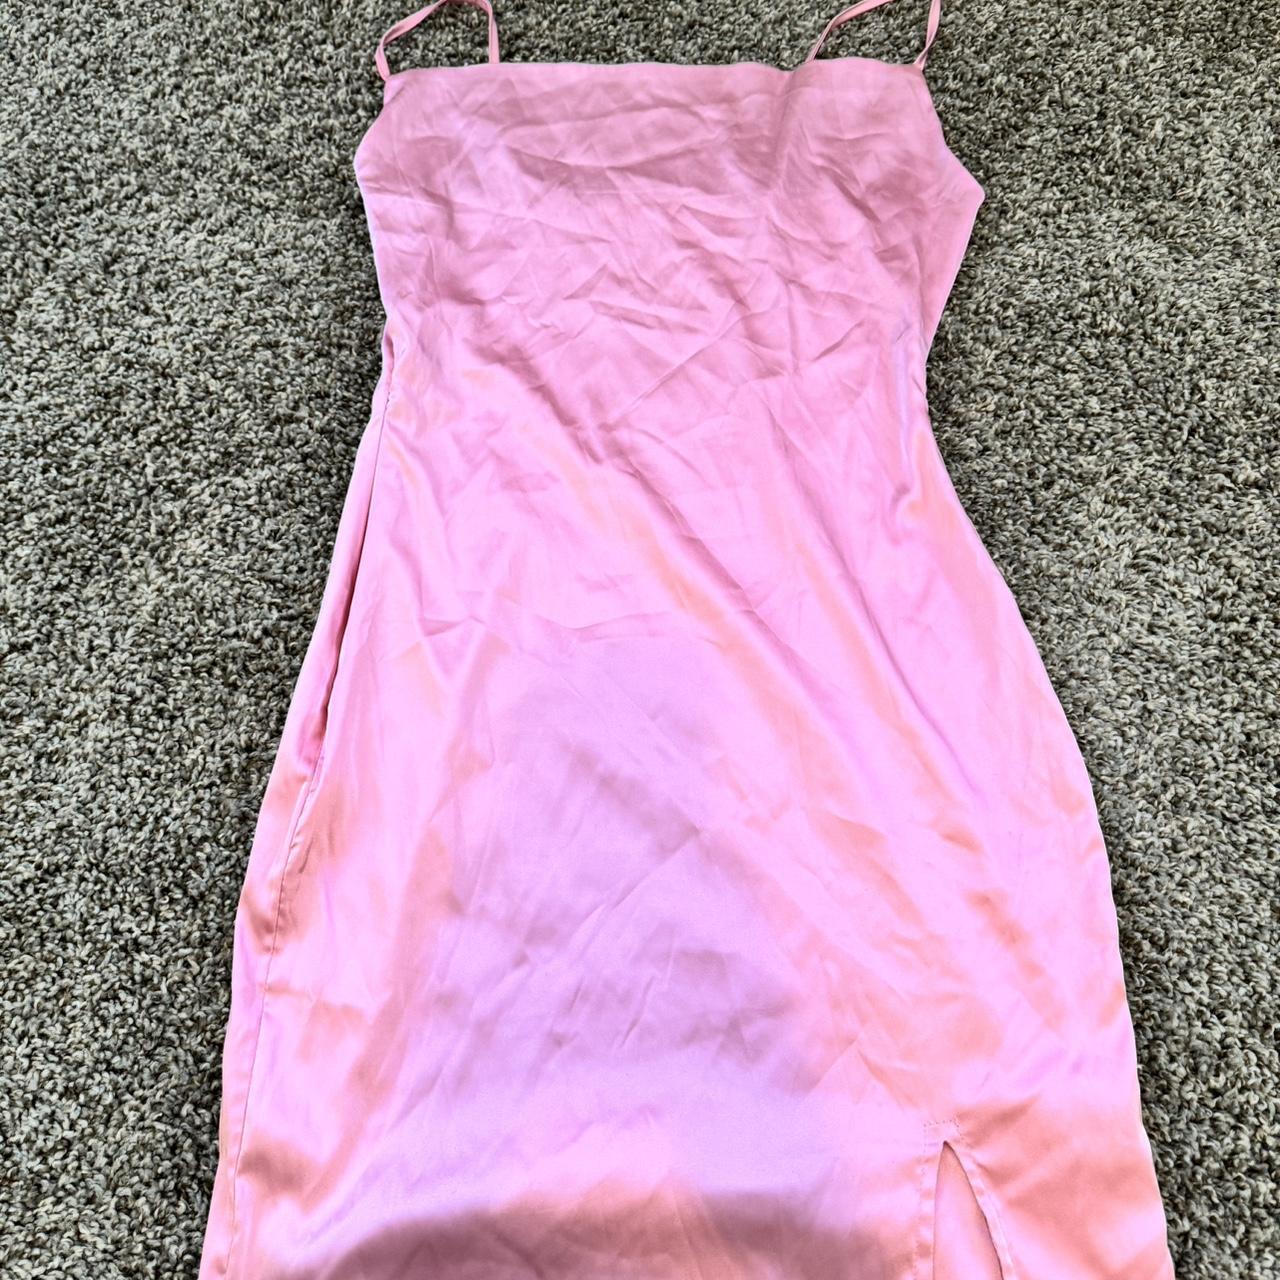 BRAND NEAW pink silk dress size s/m - Depop